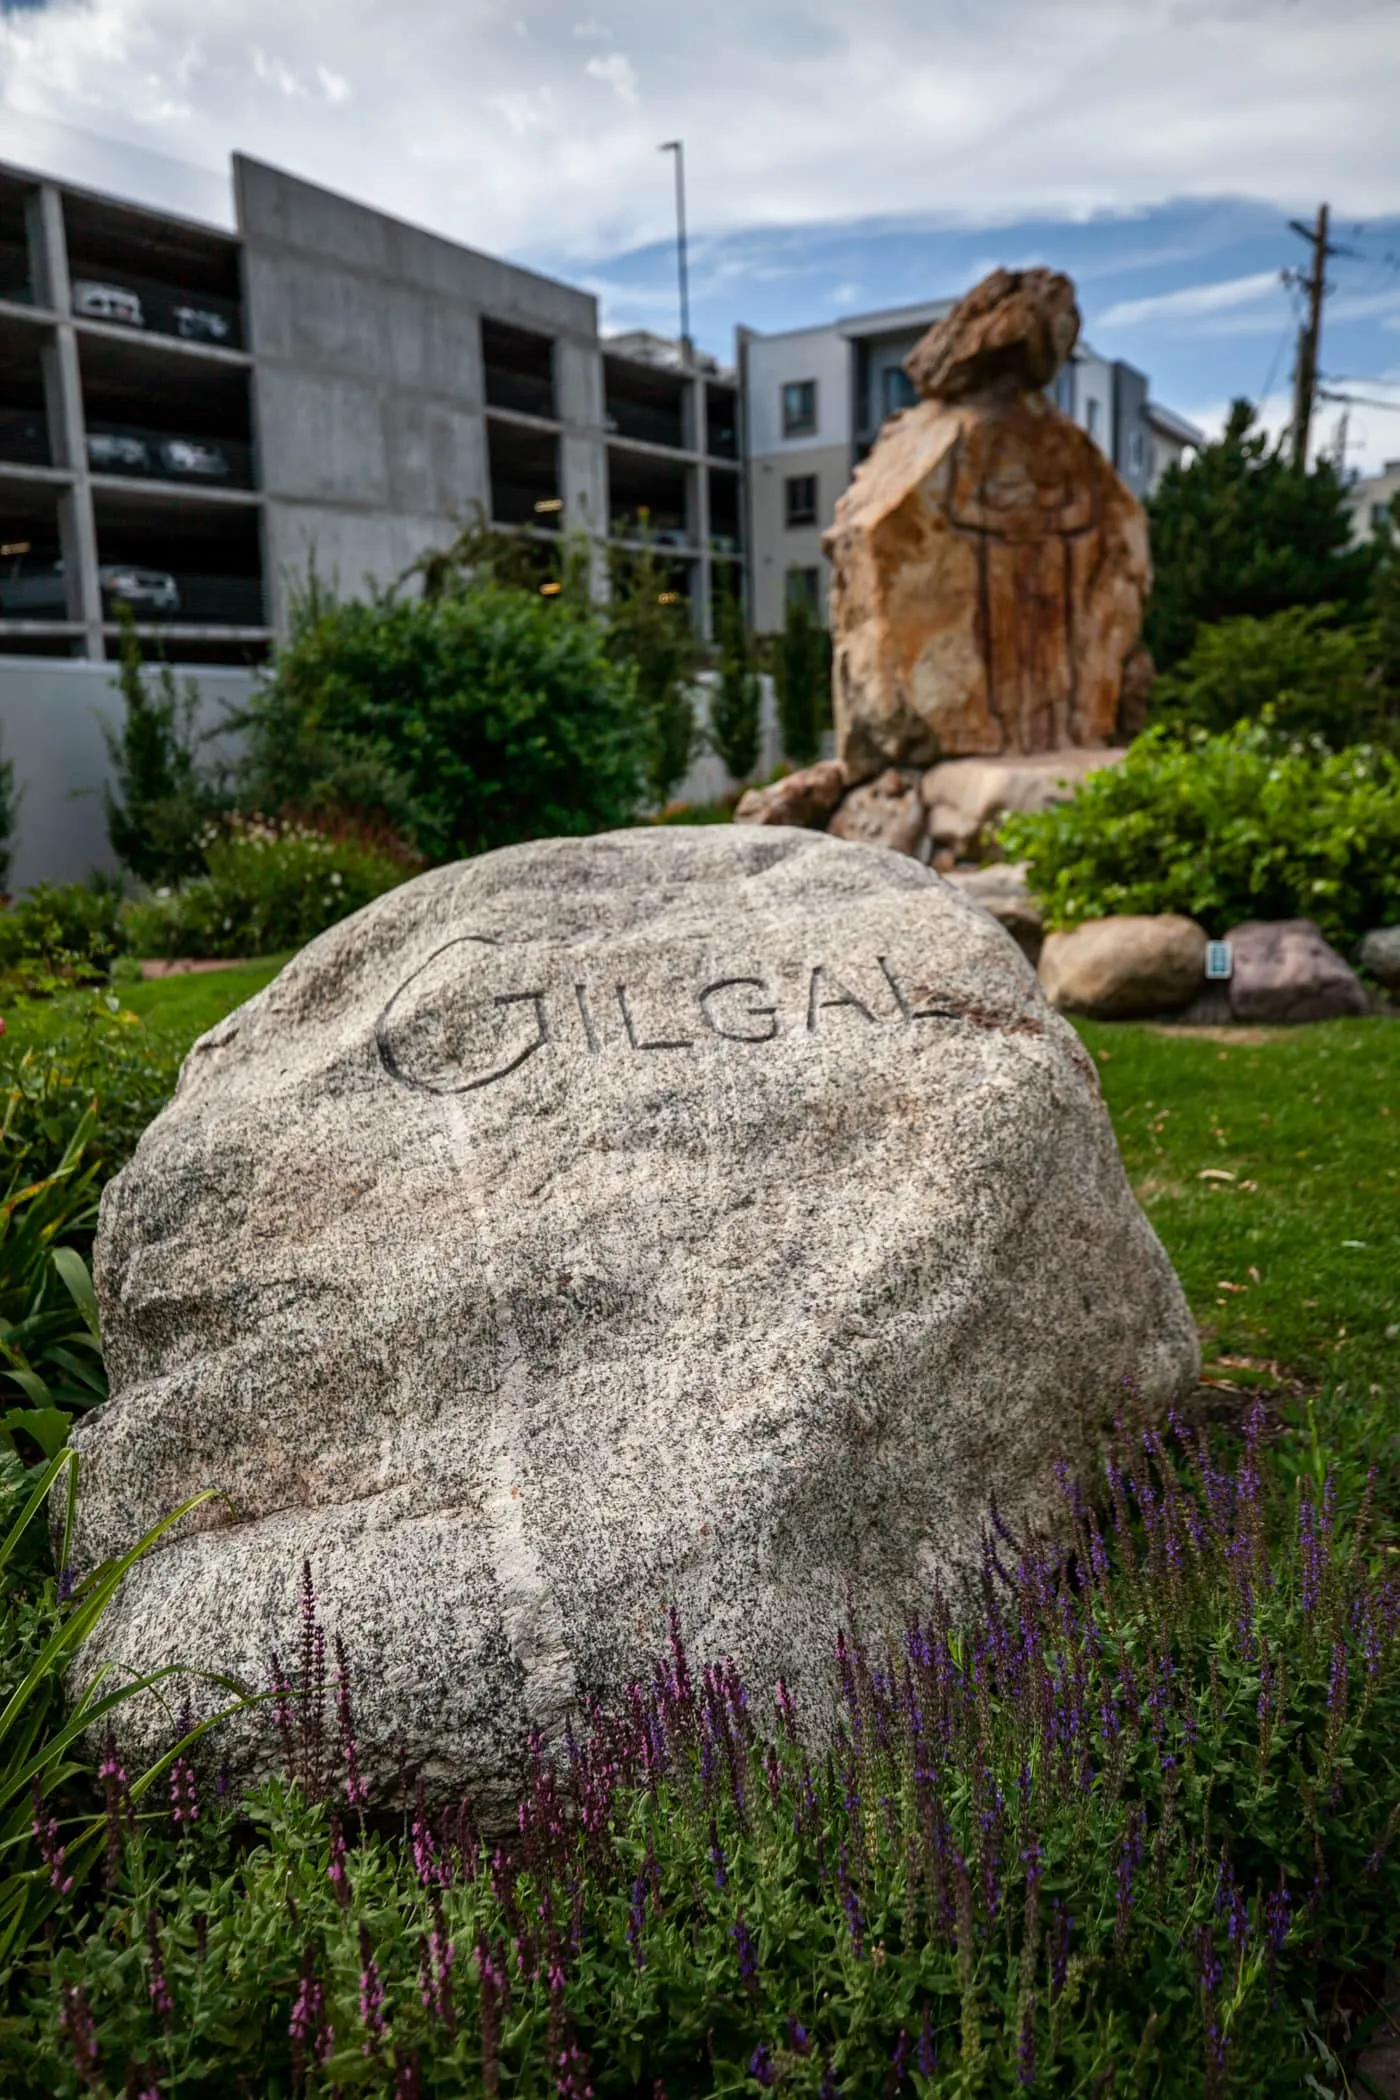 Gilgal Sculpture Garden in Salt Lake City, Utah